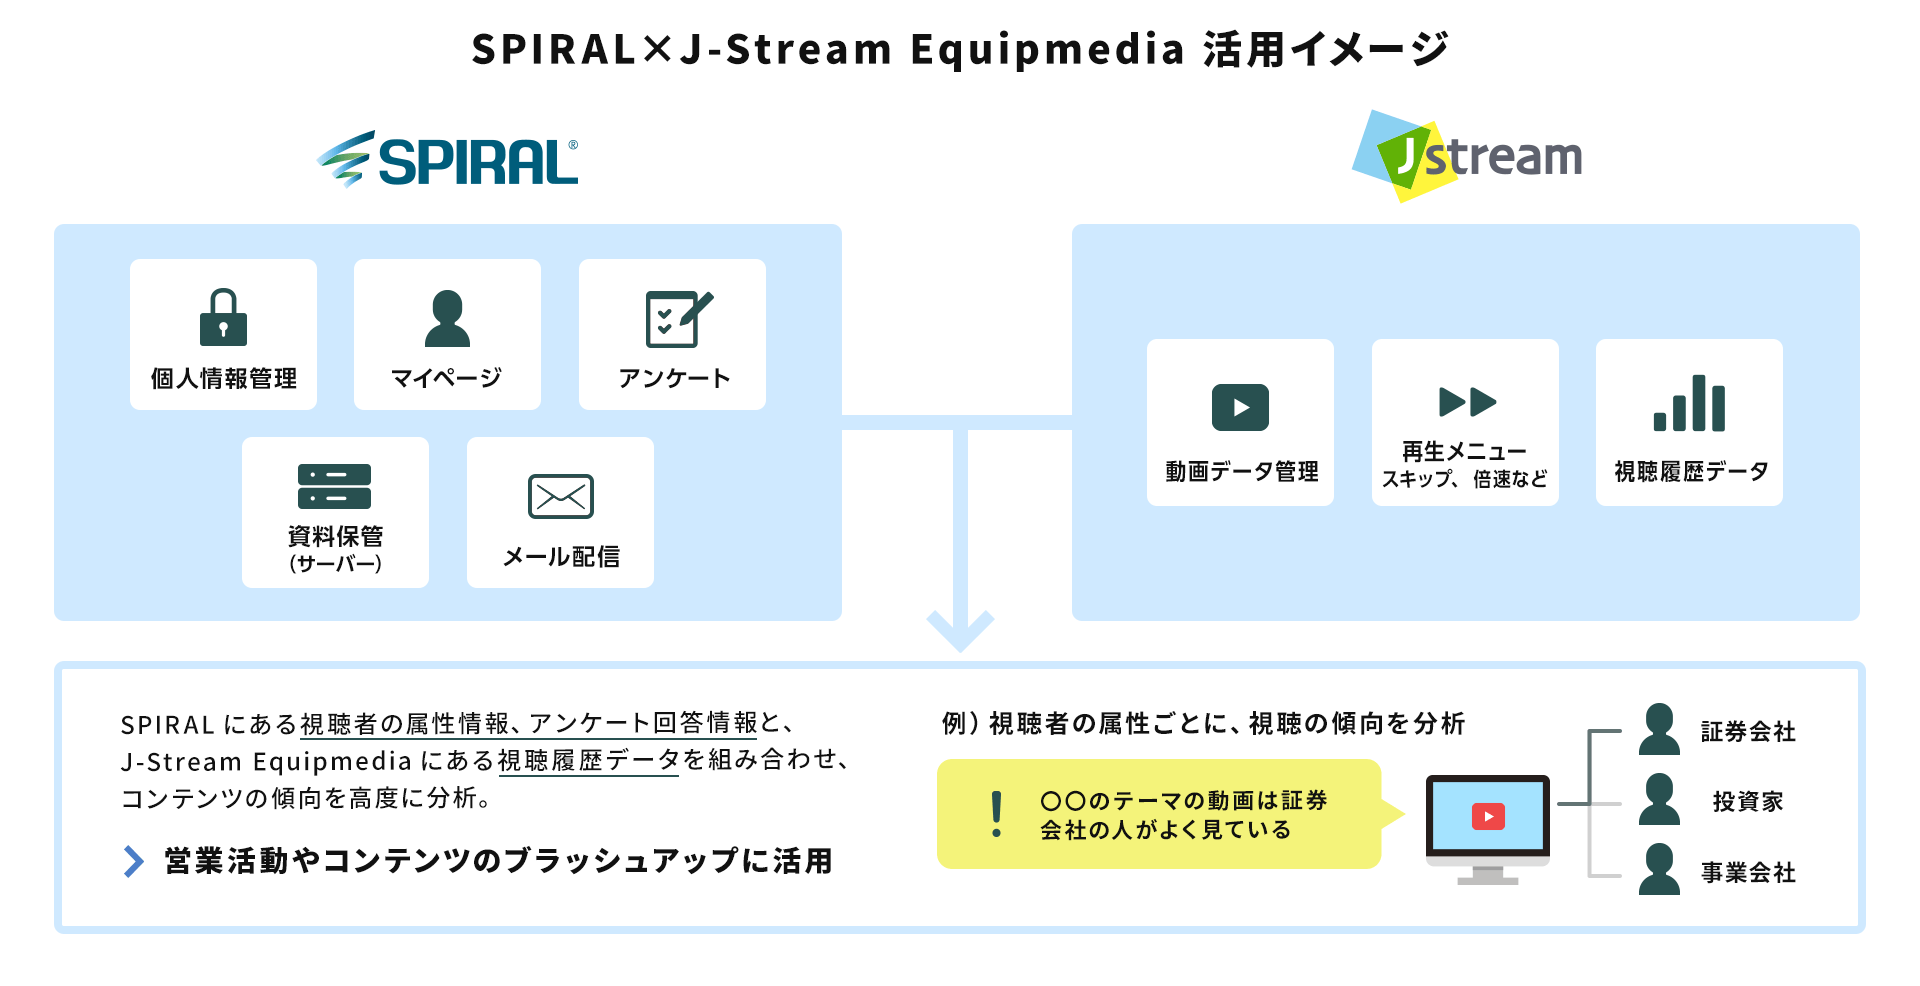 SPIRAL® × J-stream Equipmedia 活用イメージ